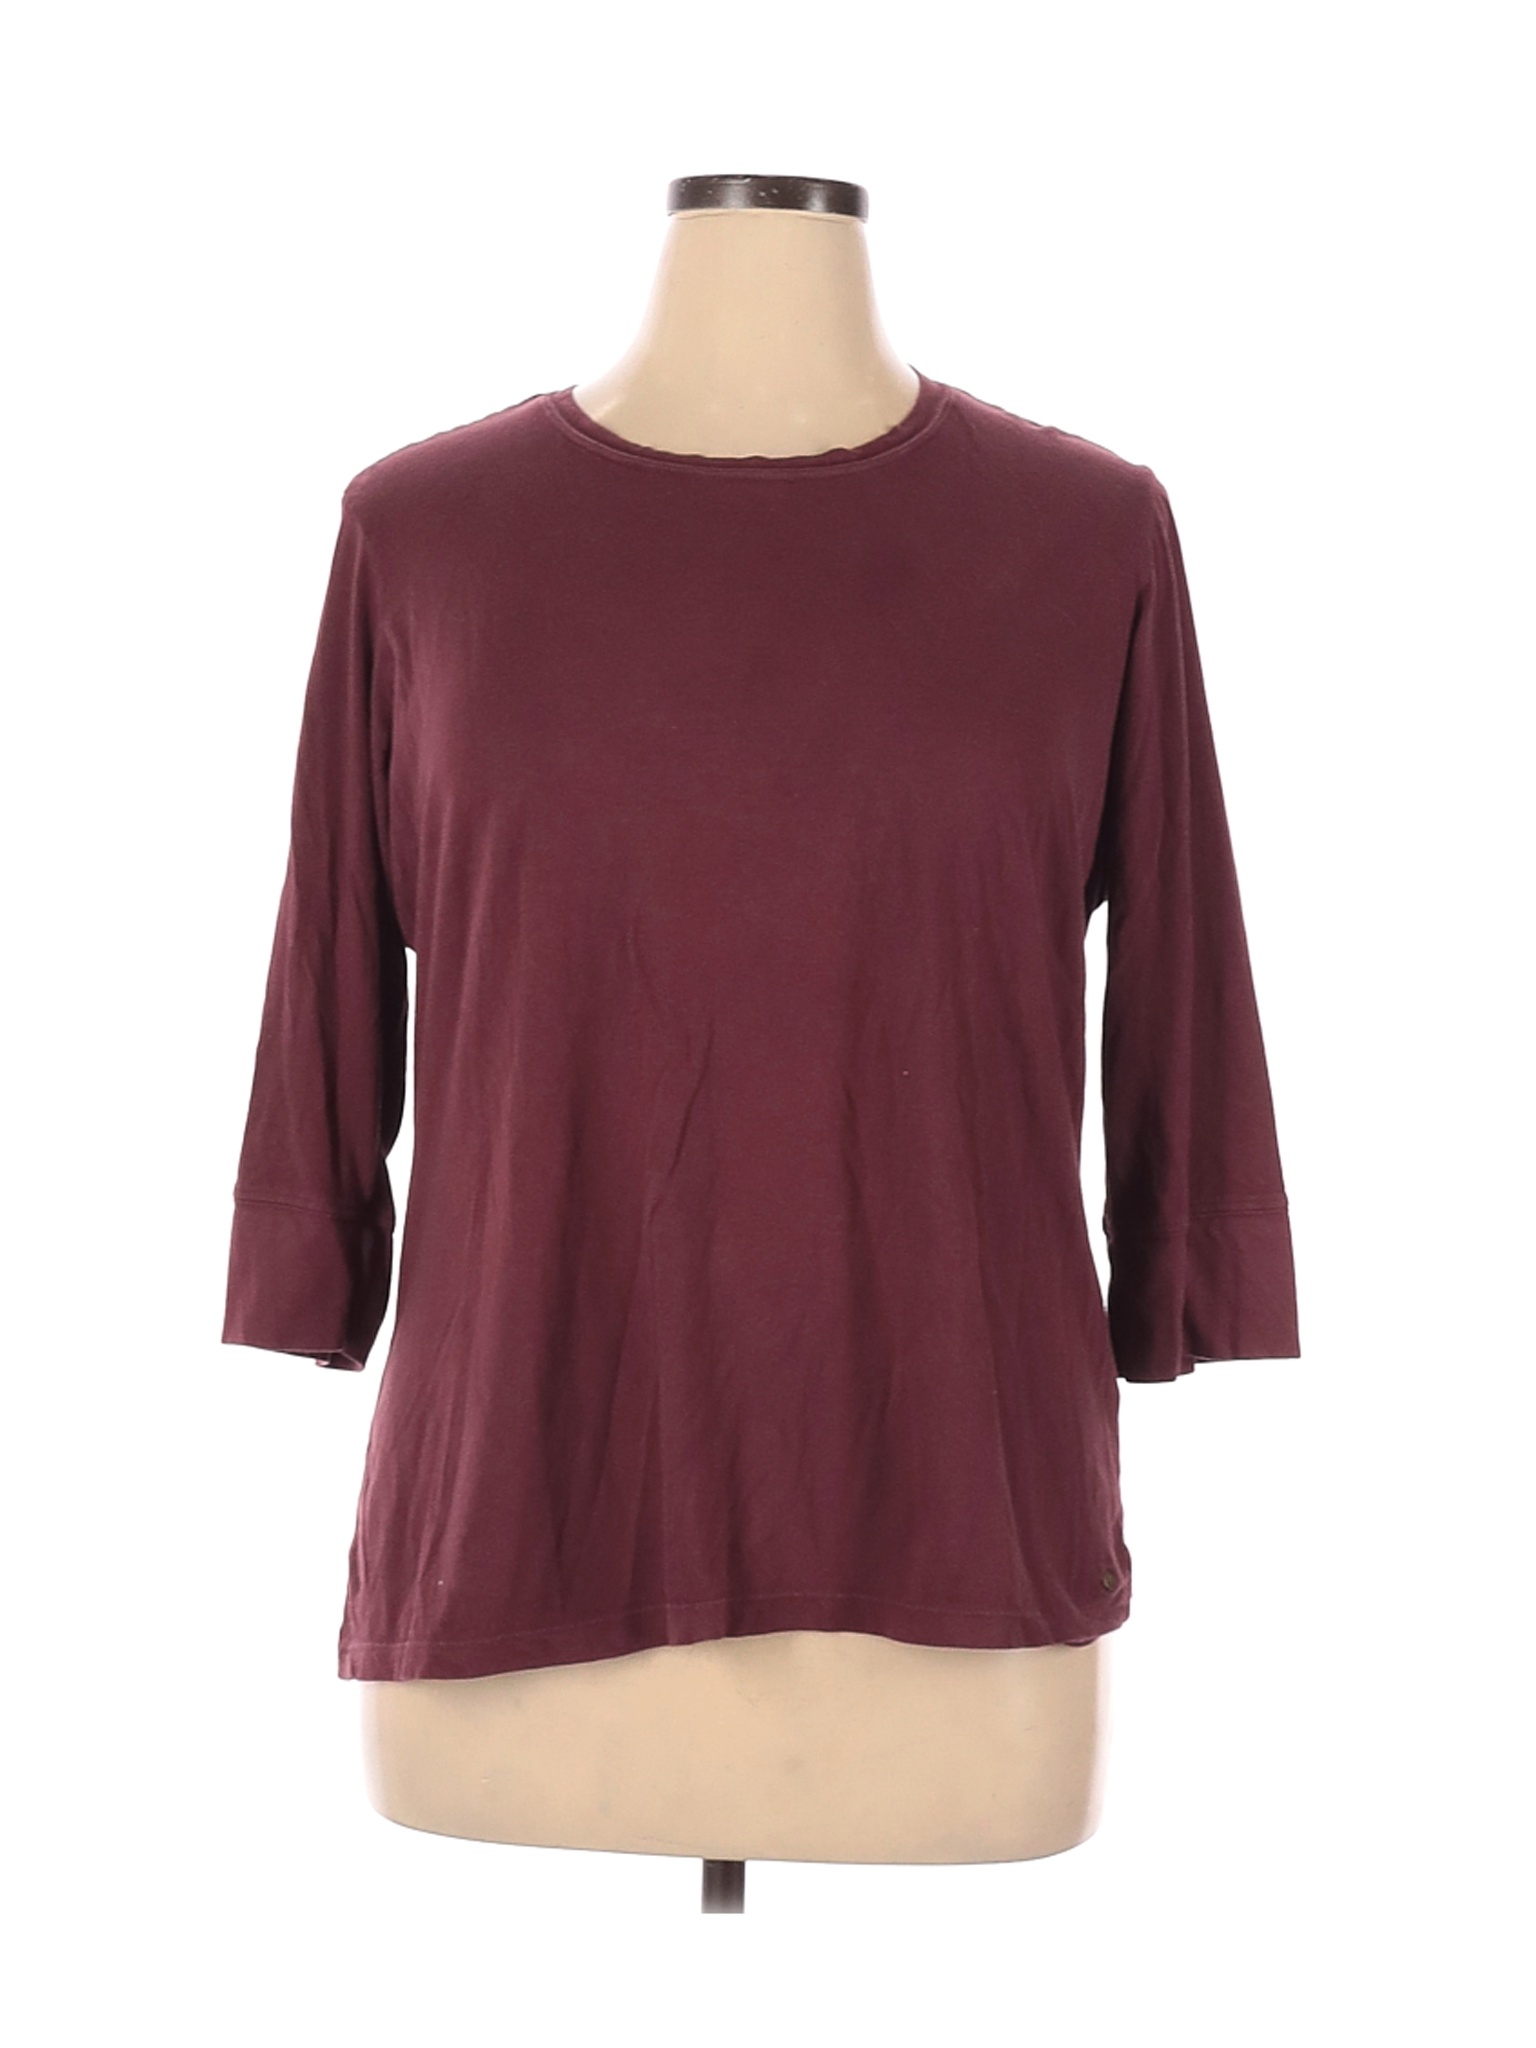 Ruff Hewn 100% Cotton Solid Maroon Burgundy 3/4 Sleeve T-Shirt Size 1X ...